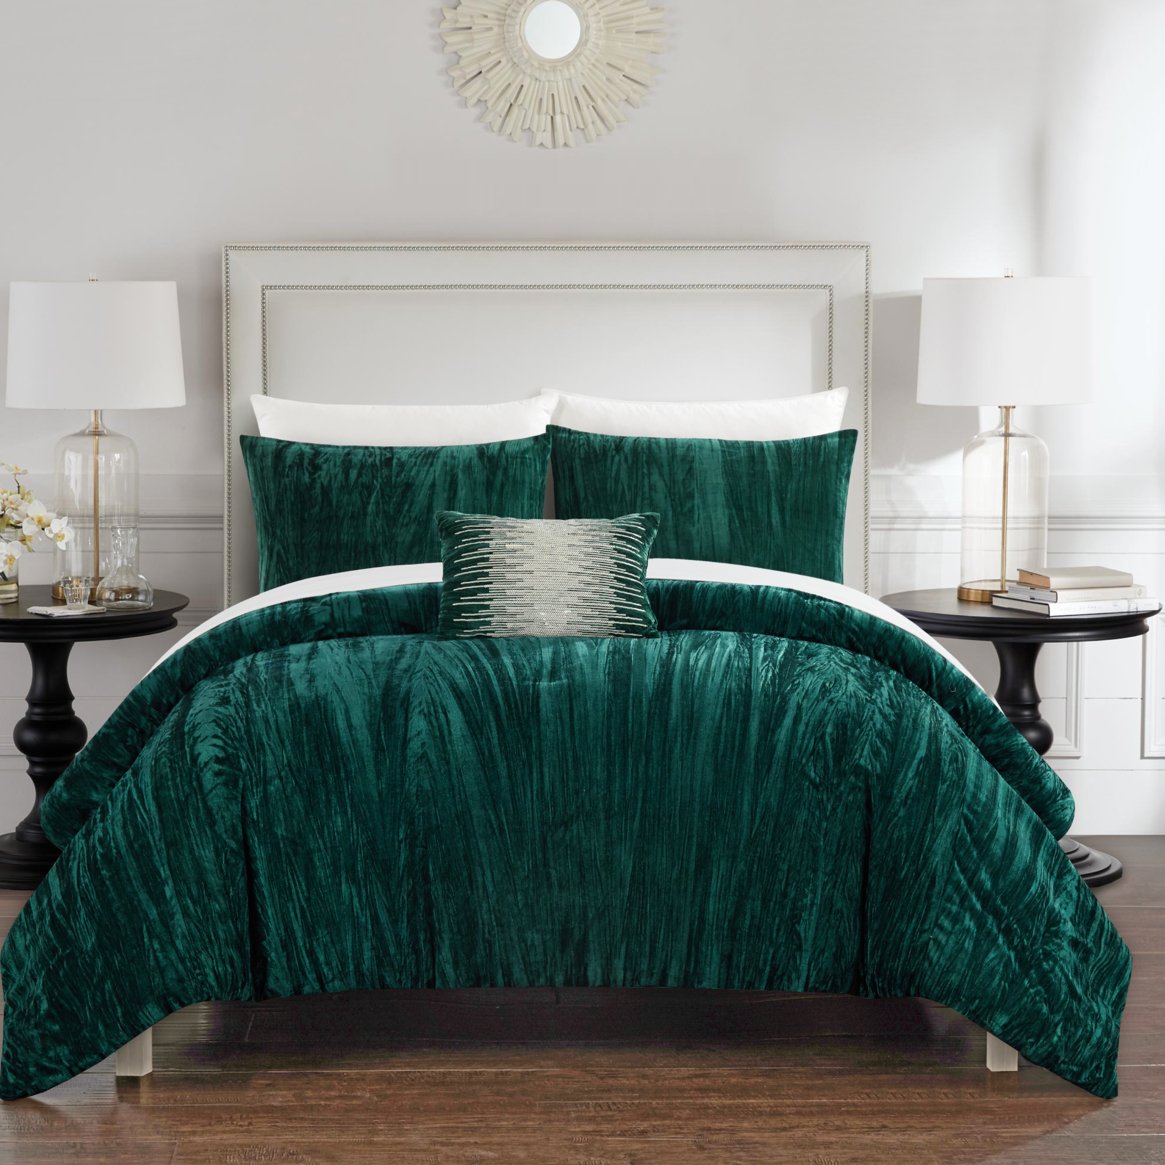 Merieta 8 Piece Comforter Set Crinkle Crushed Velvet Bed In A Bag Bedding - Green, King